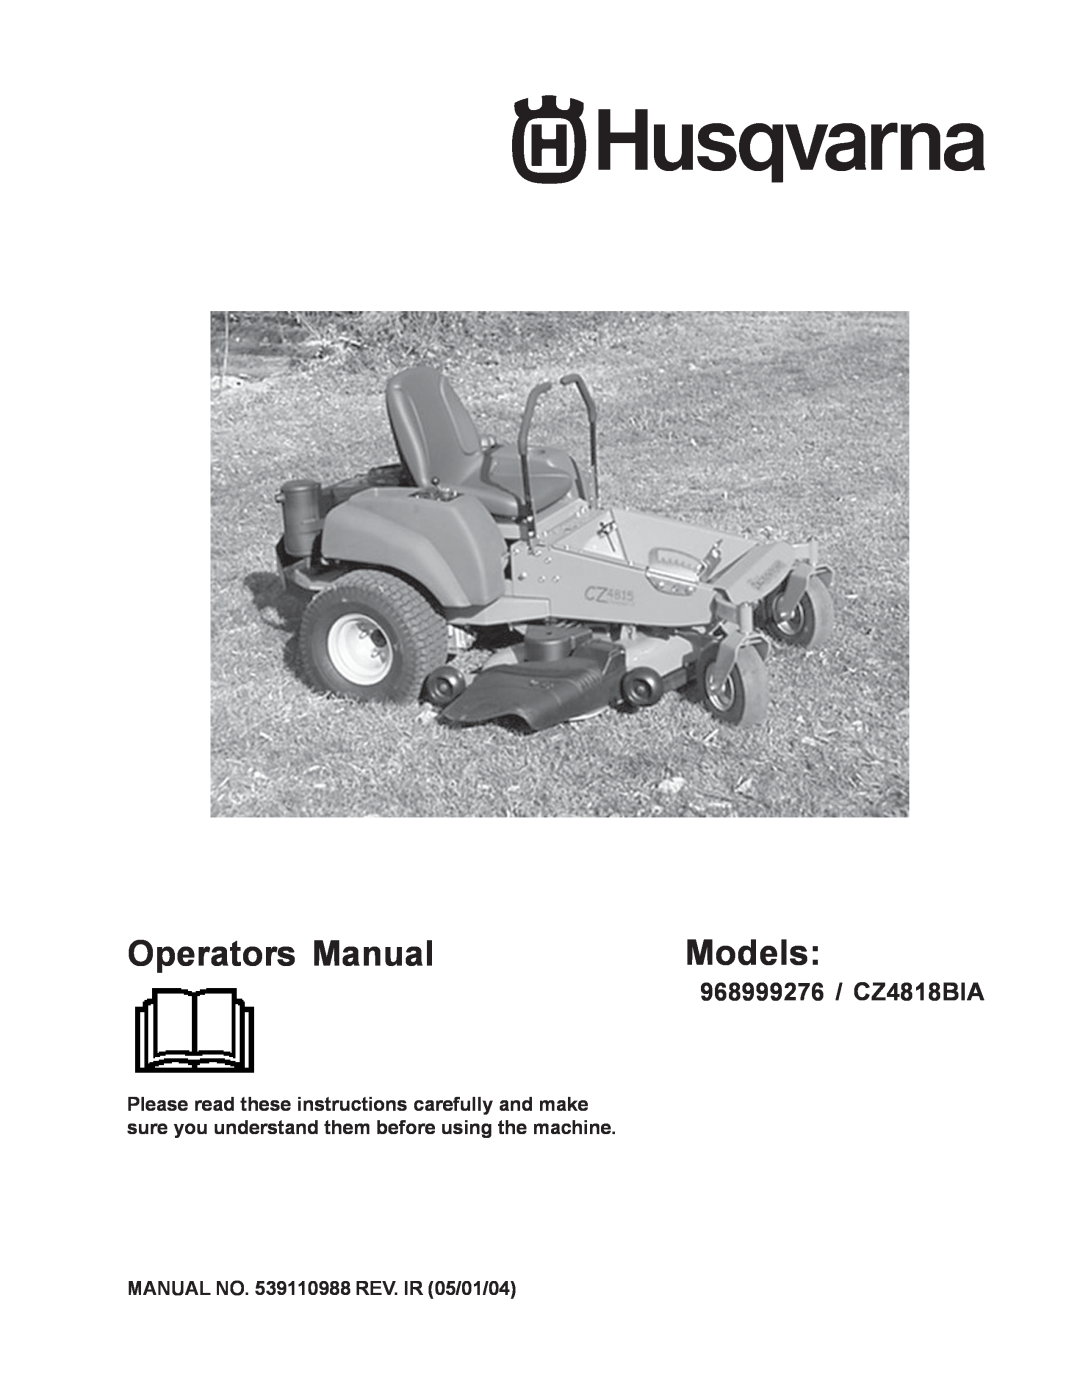 Husqvarna 968999276 / CZ4818BIA manual Operators Manual, Models 